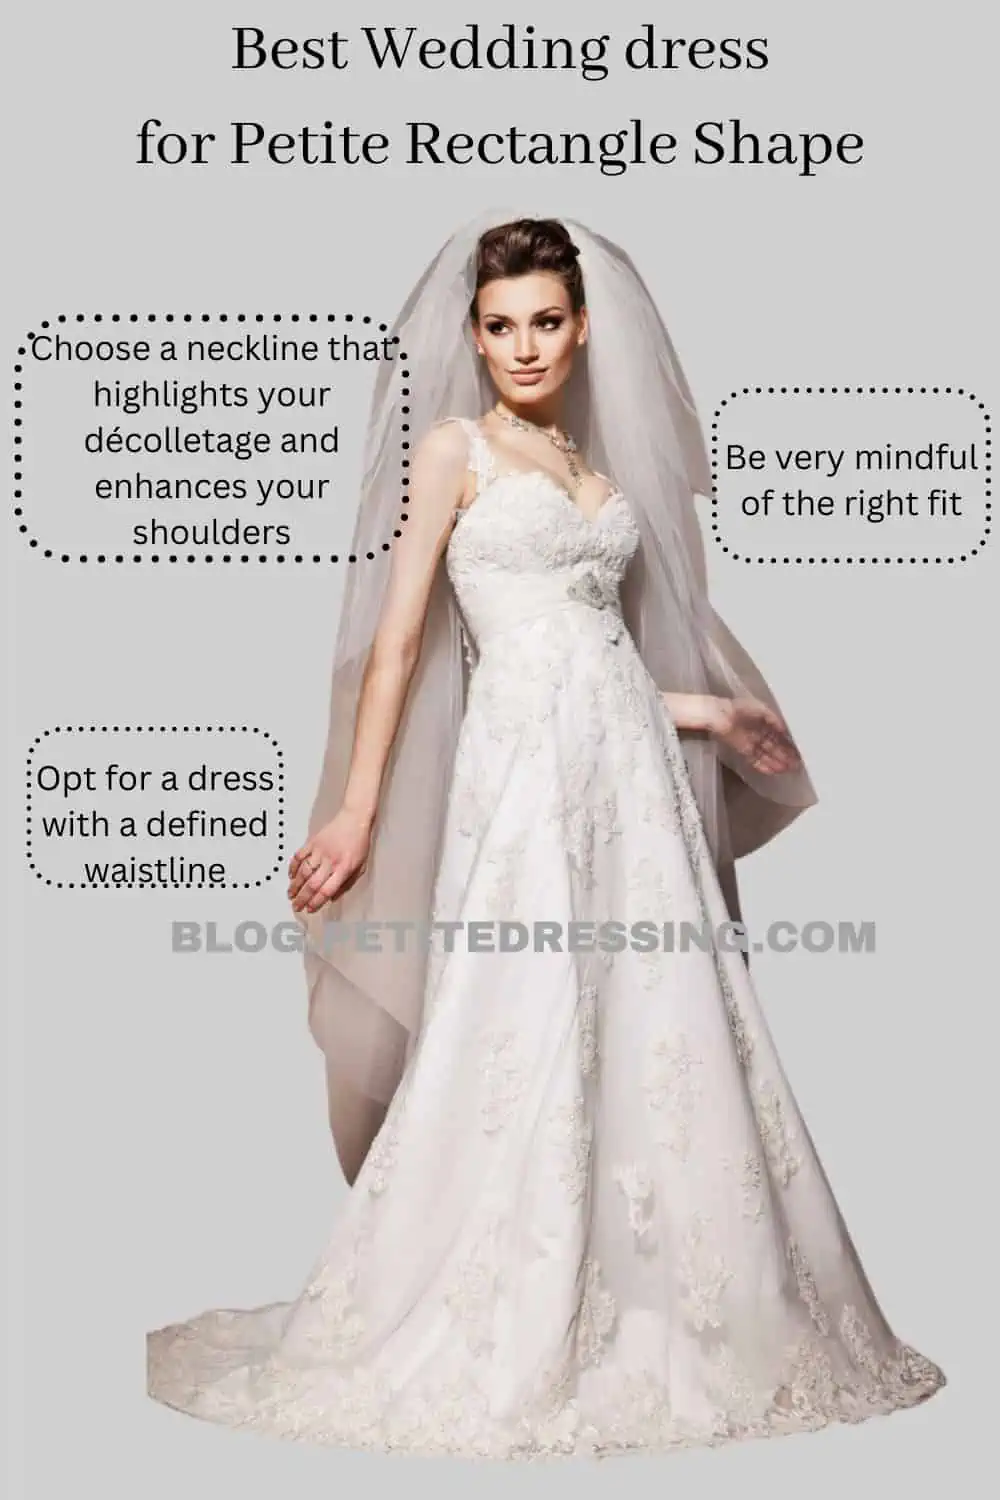 Wedding Dress Style Guide for Petite Rectangle Shape - Petite Dressing